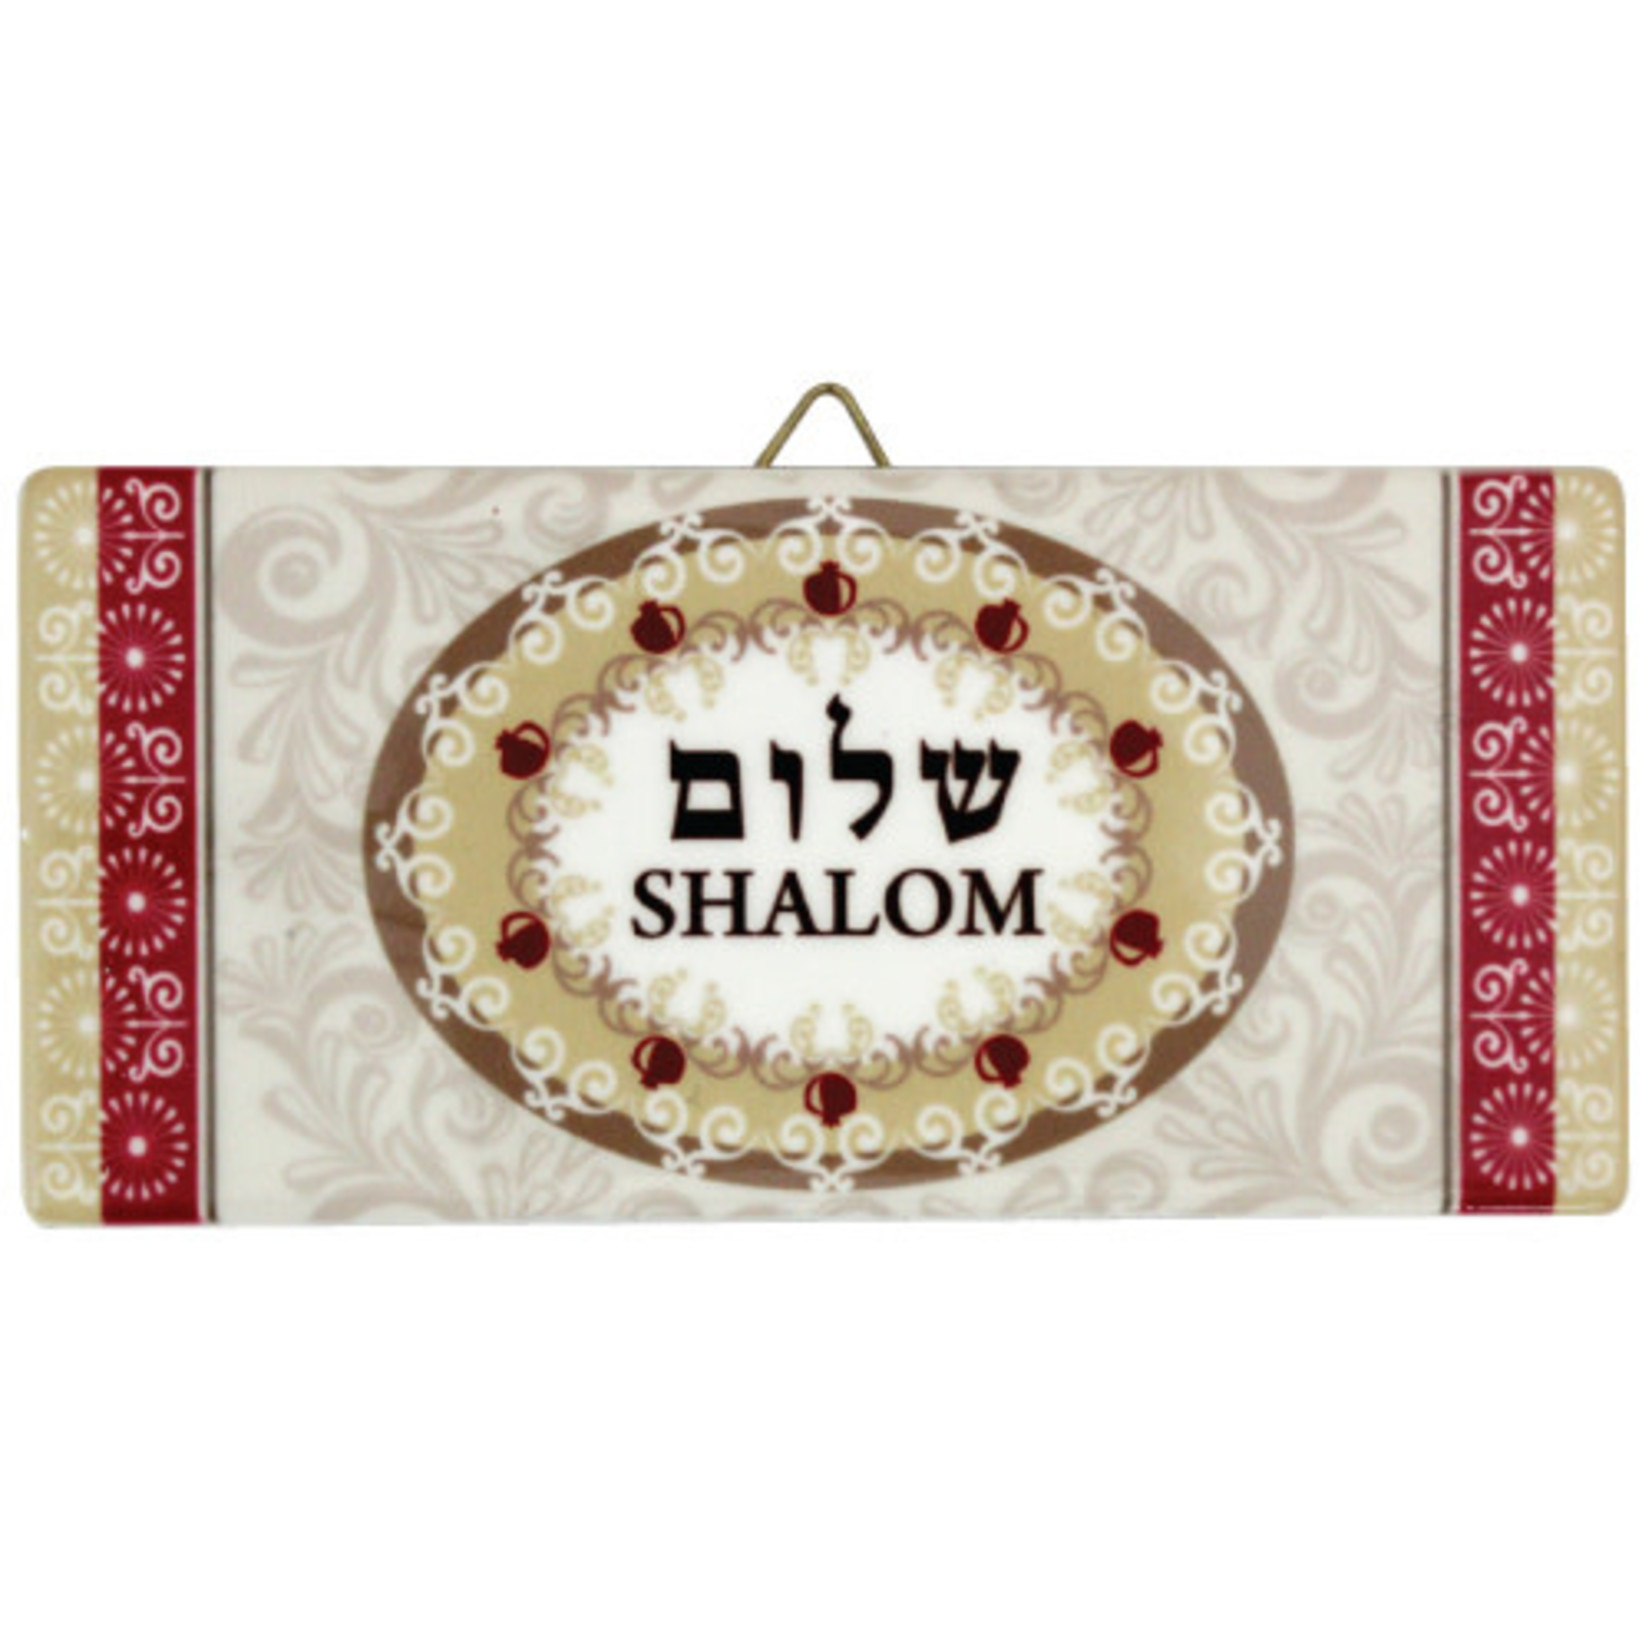 Ceramic Door Sign with Shalom